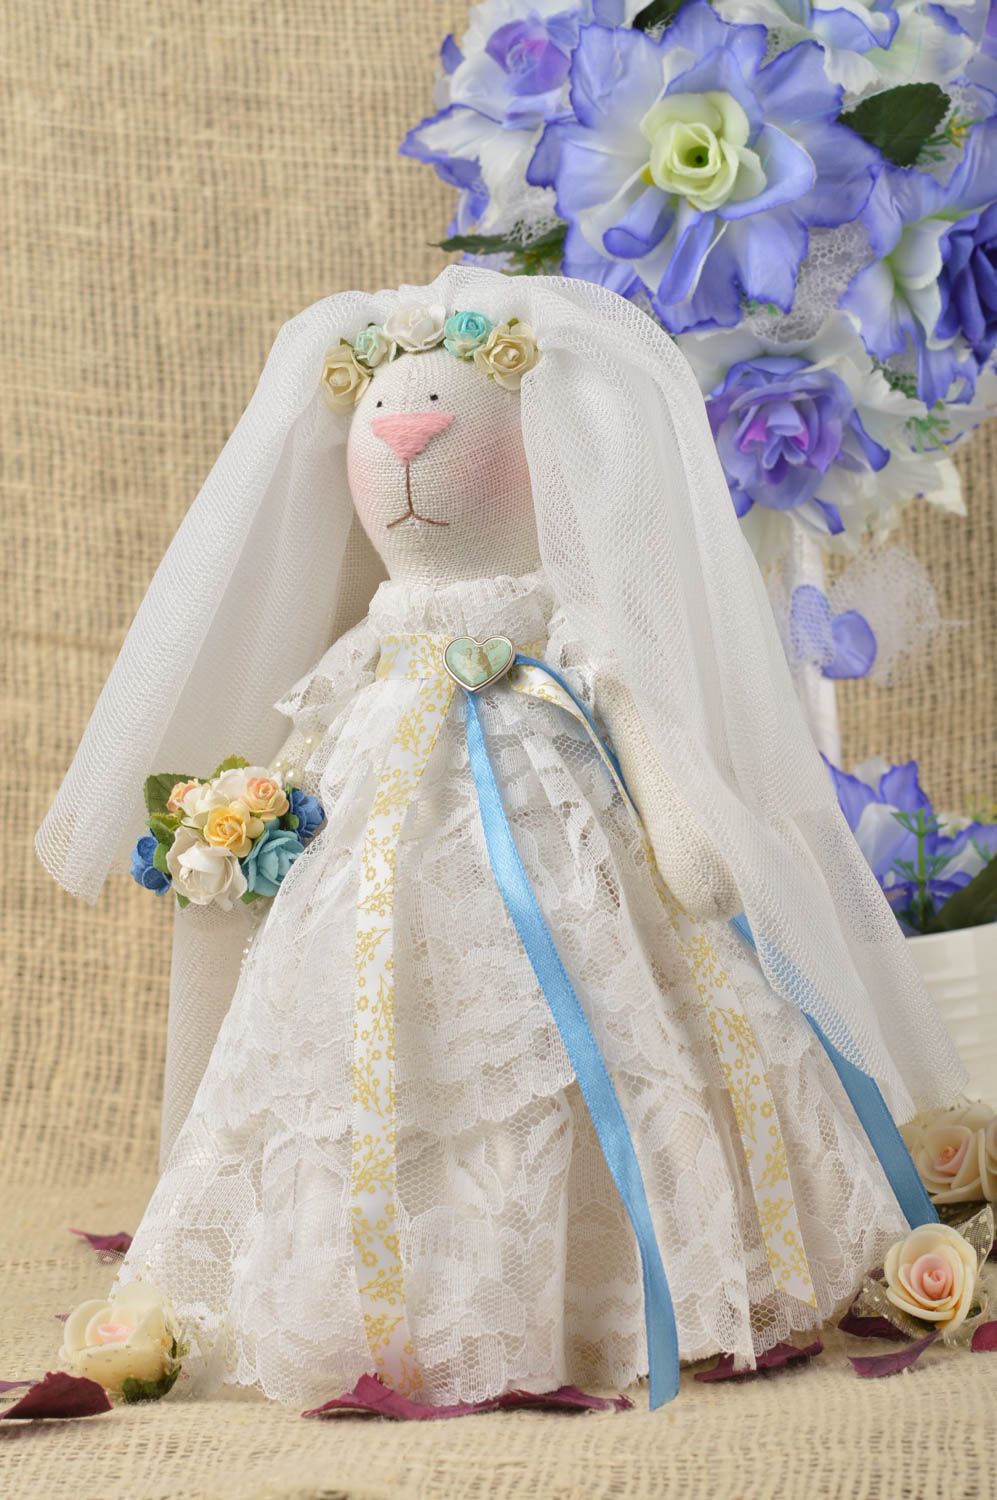 Handmade wedding rabbit unusual soft toy bride stylish wedding decor ideas photo 1